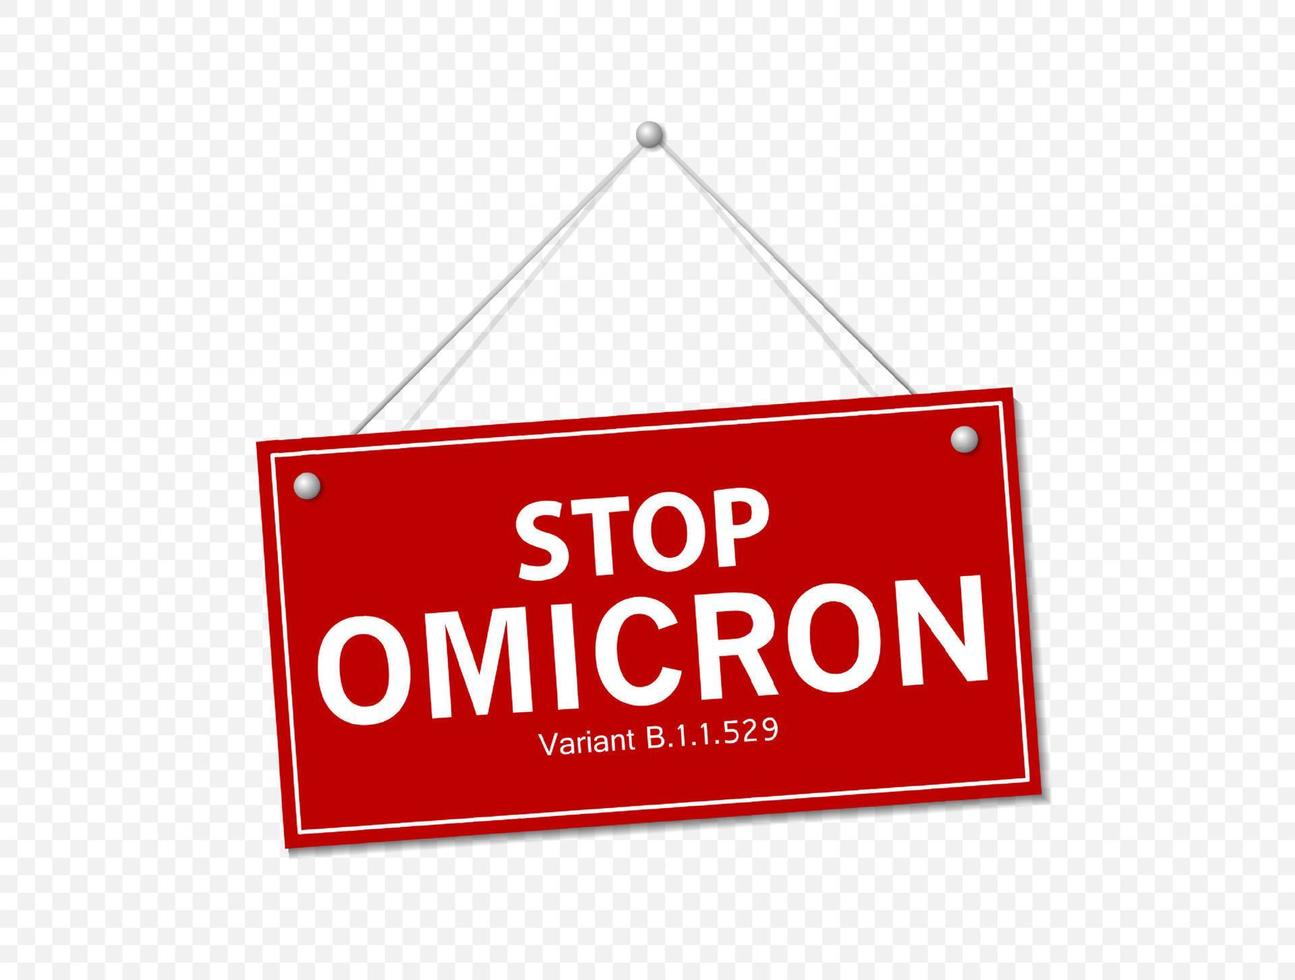 Omicron Covid-19 Coronavirus variant typography logo. New strain of SARS CoV-2. Stop sign for Omicron. vector design